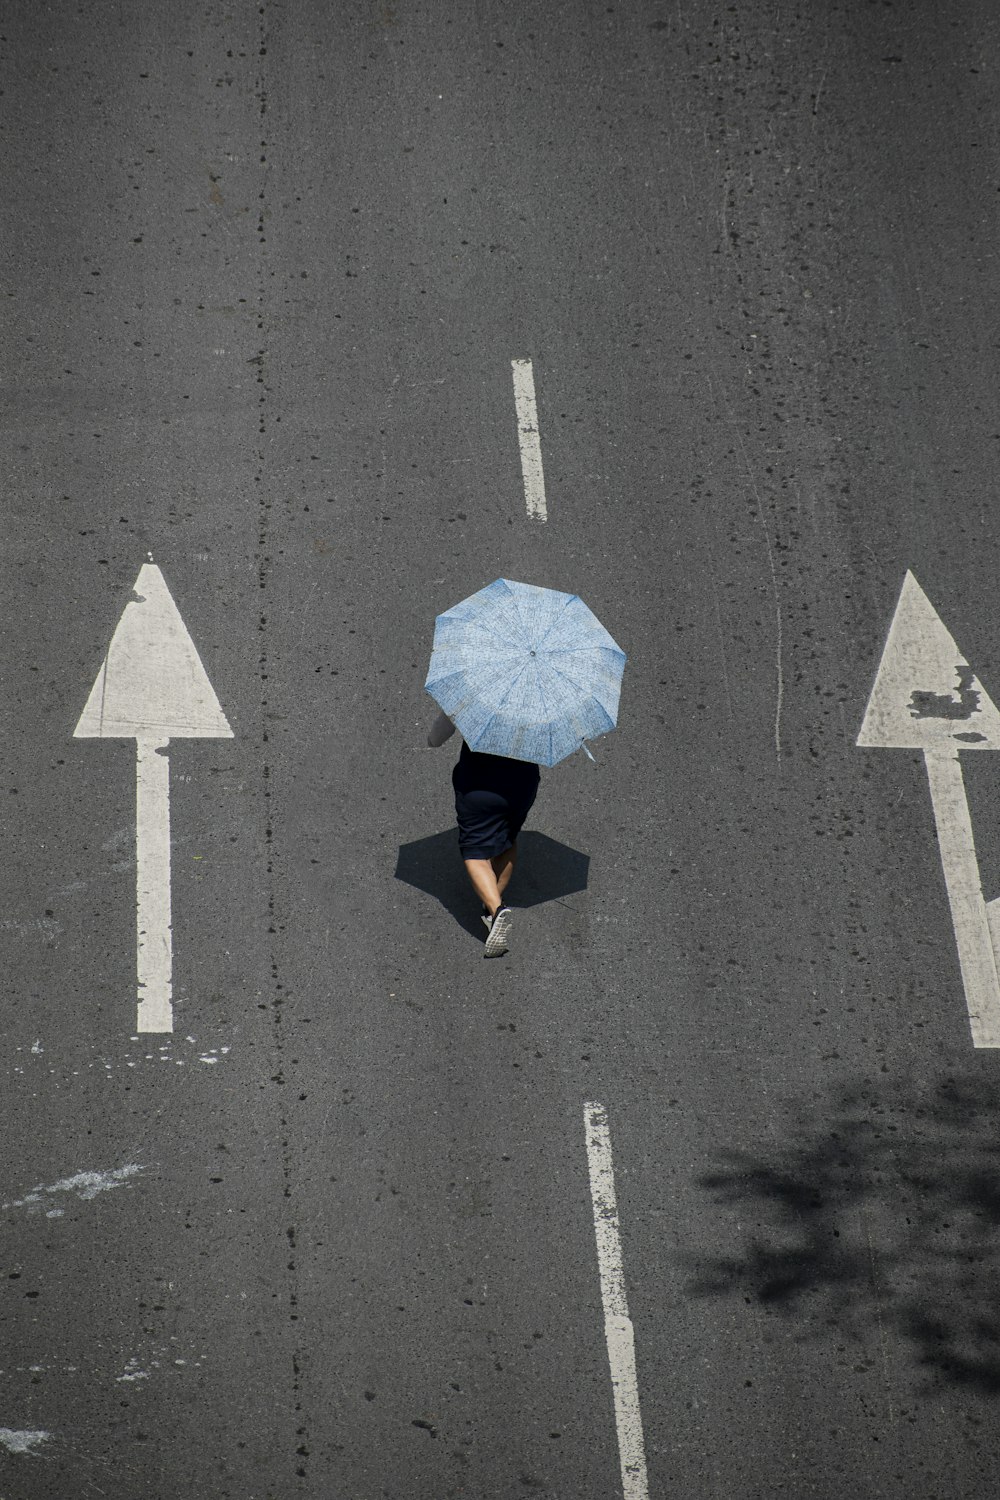 a person walking down a street holding a blue umbrella